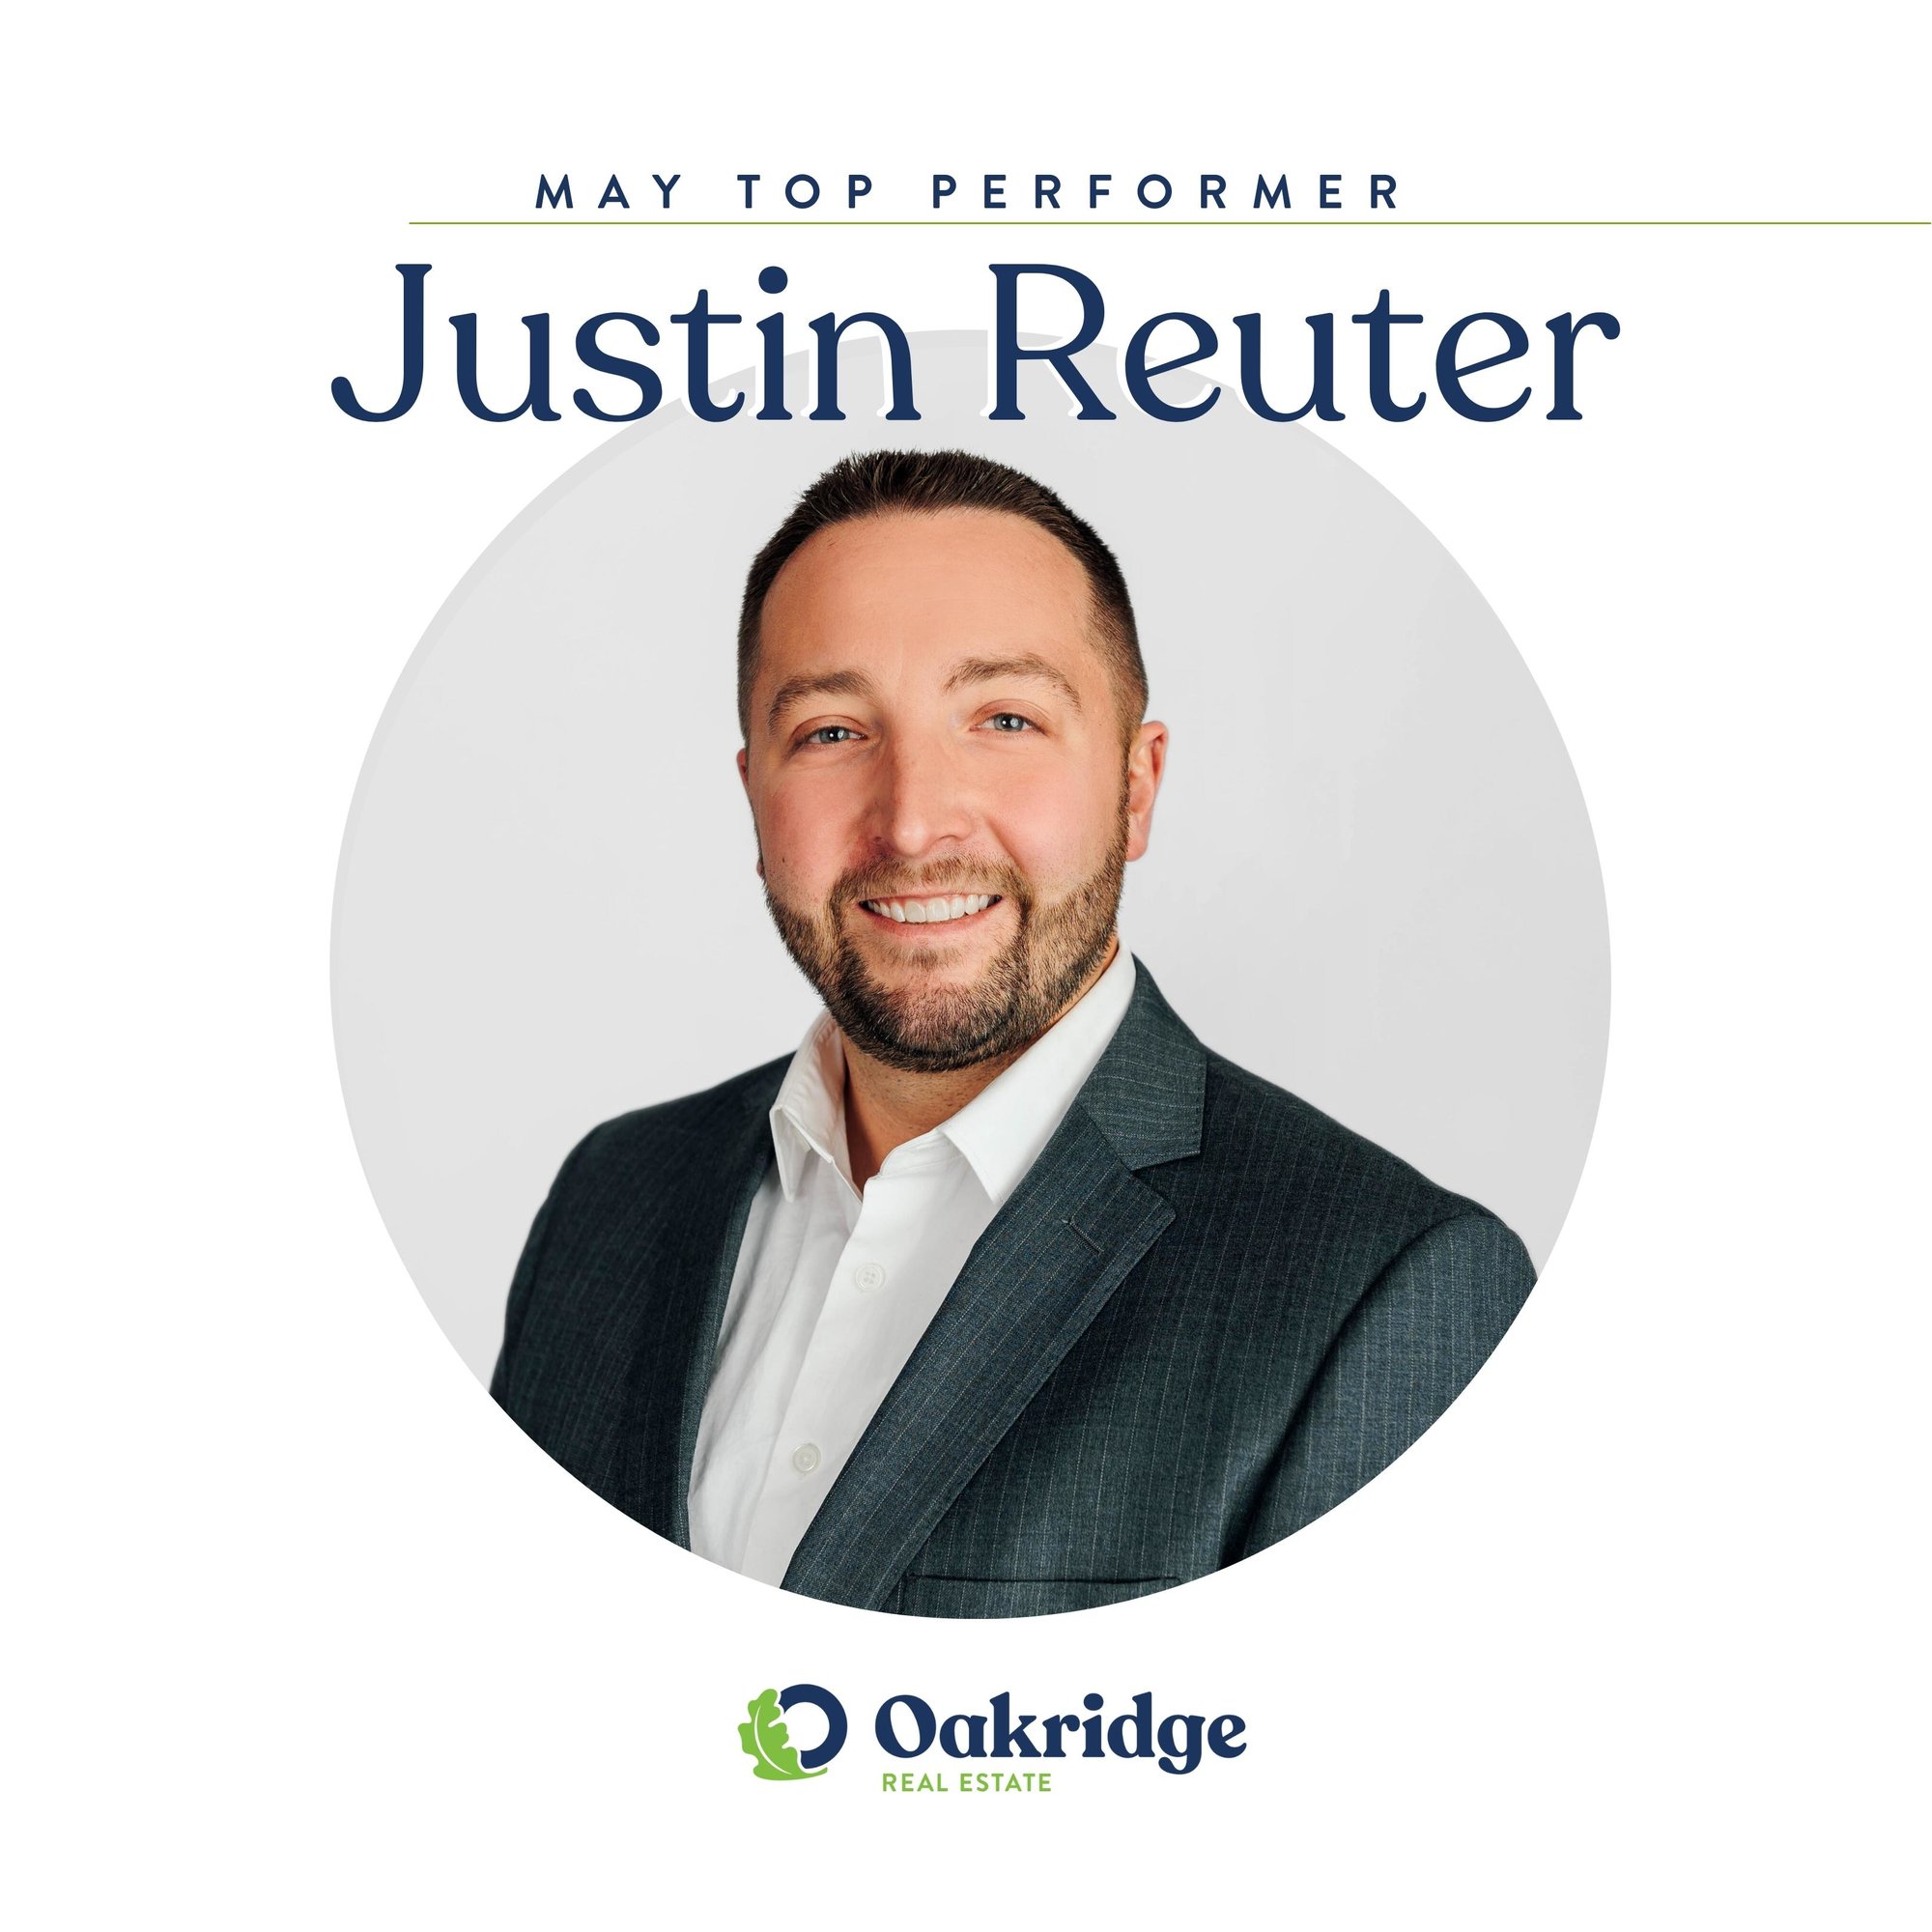 Justin Reuter May Top Performer Oakridge Real Estate